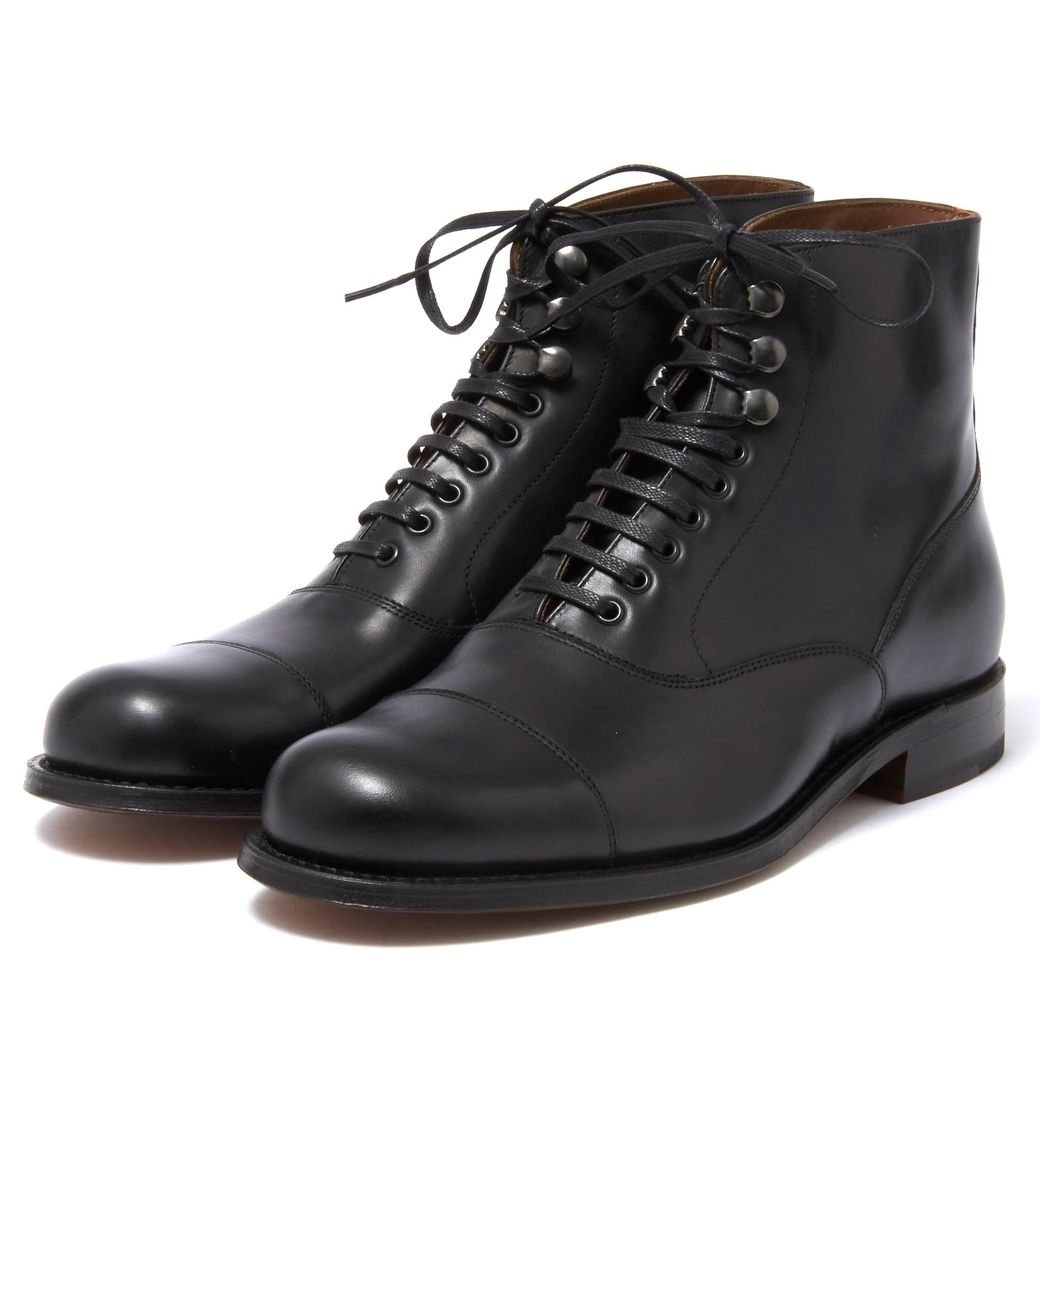 oxford boots black